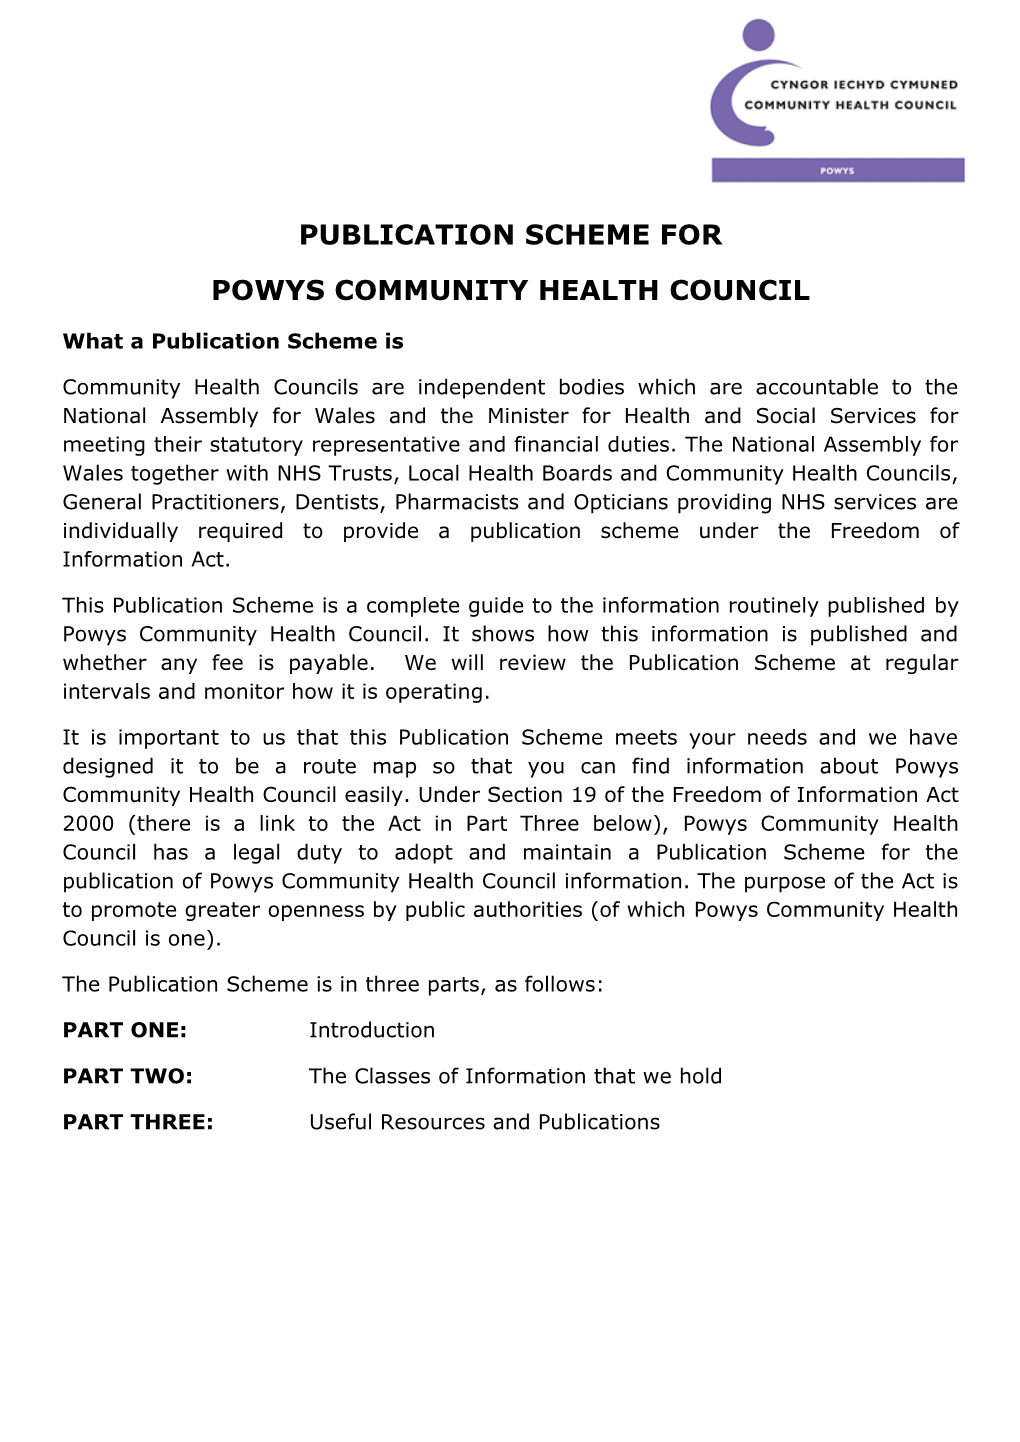 Publication Scheme for Powys Community Health